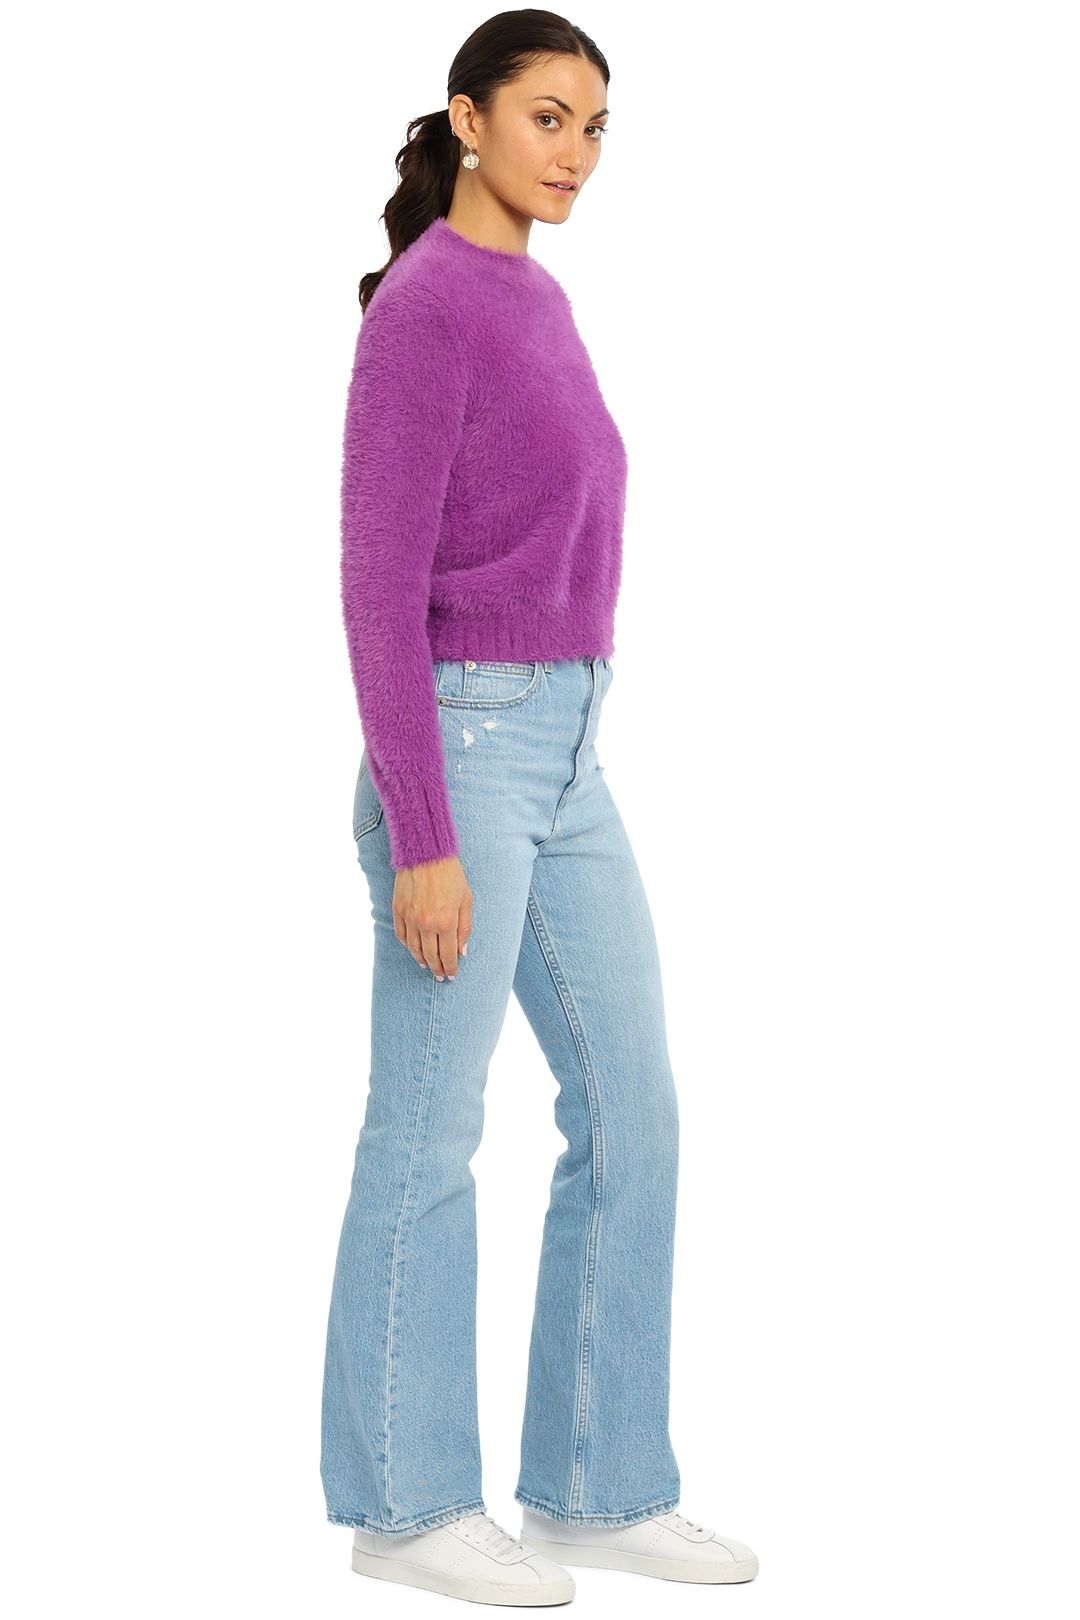 Neuw Denim Kate Knit Purple Long Sleeve